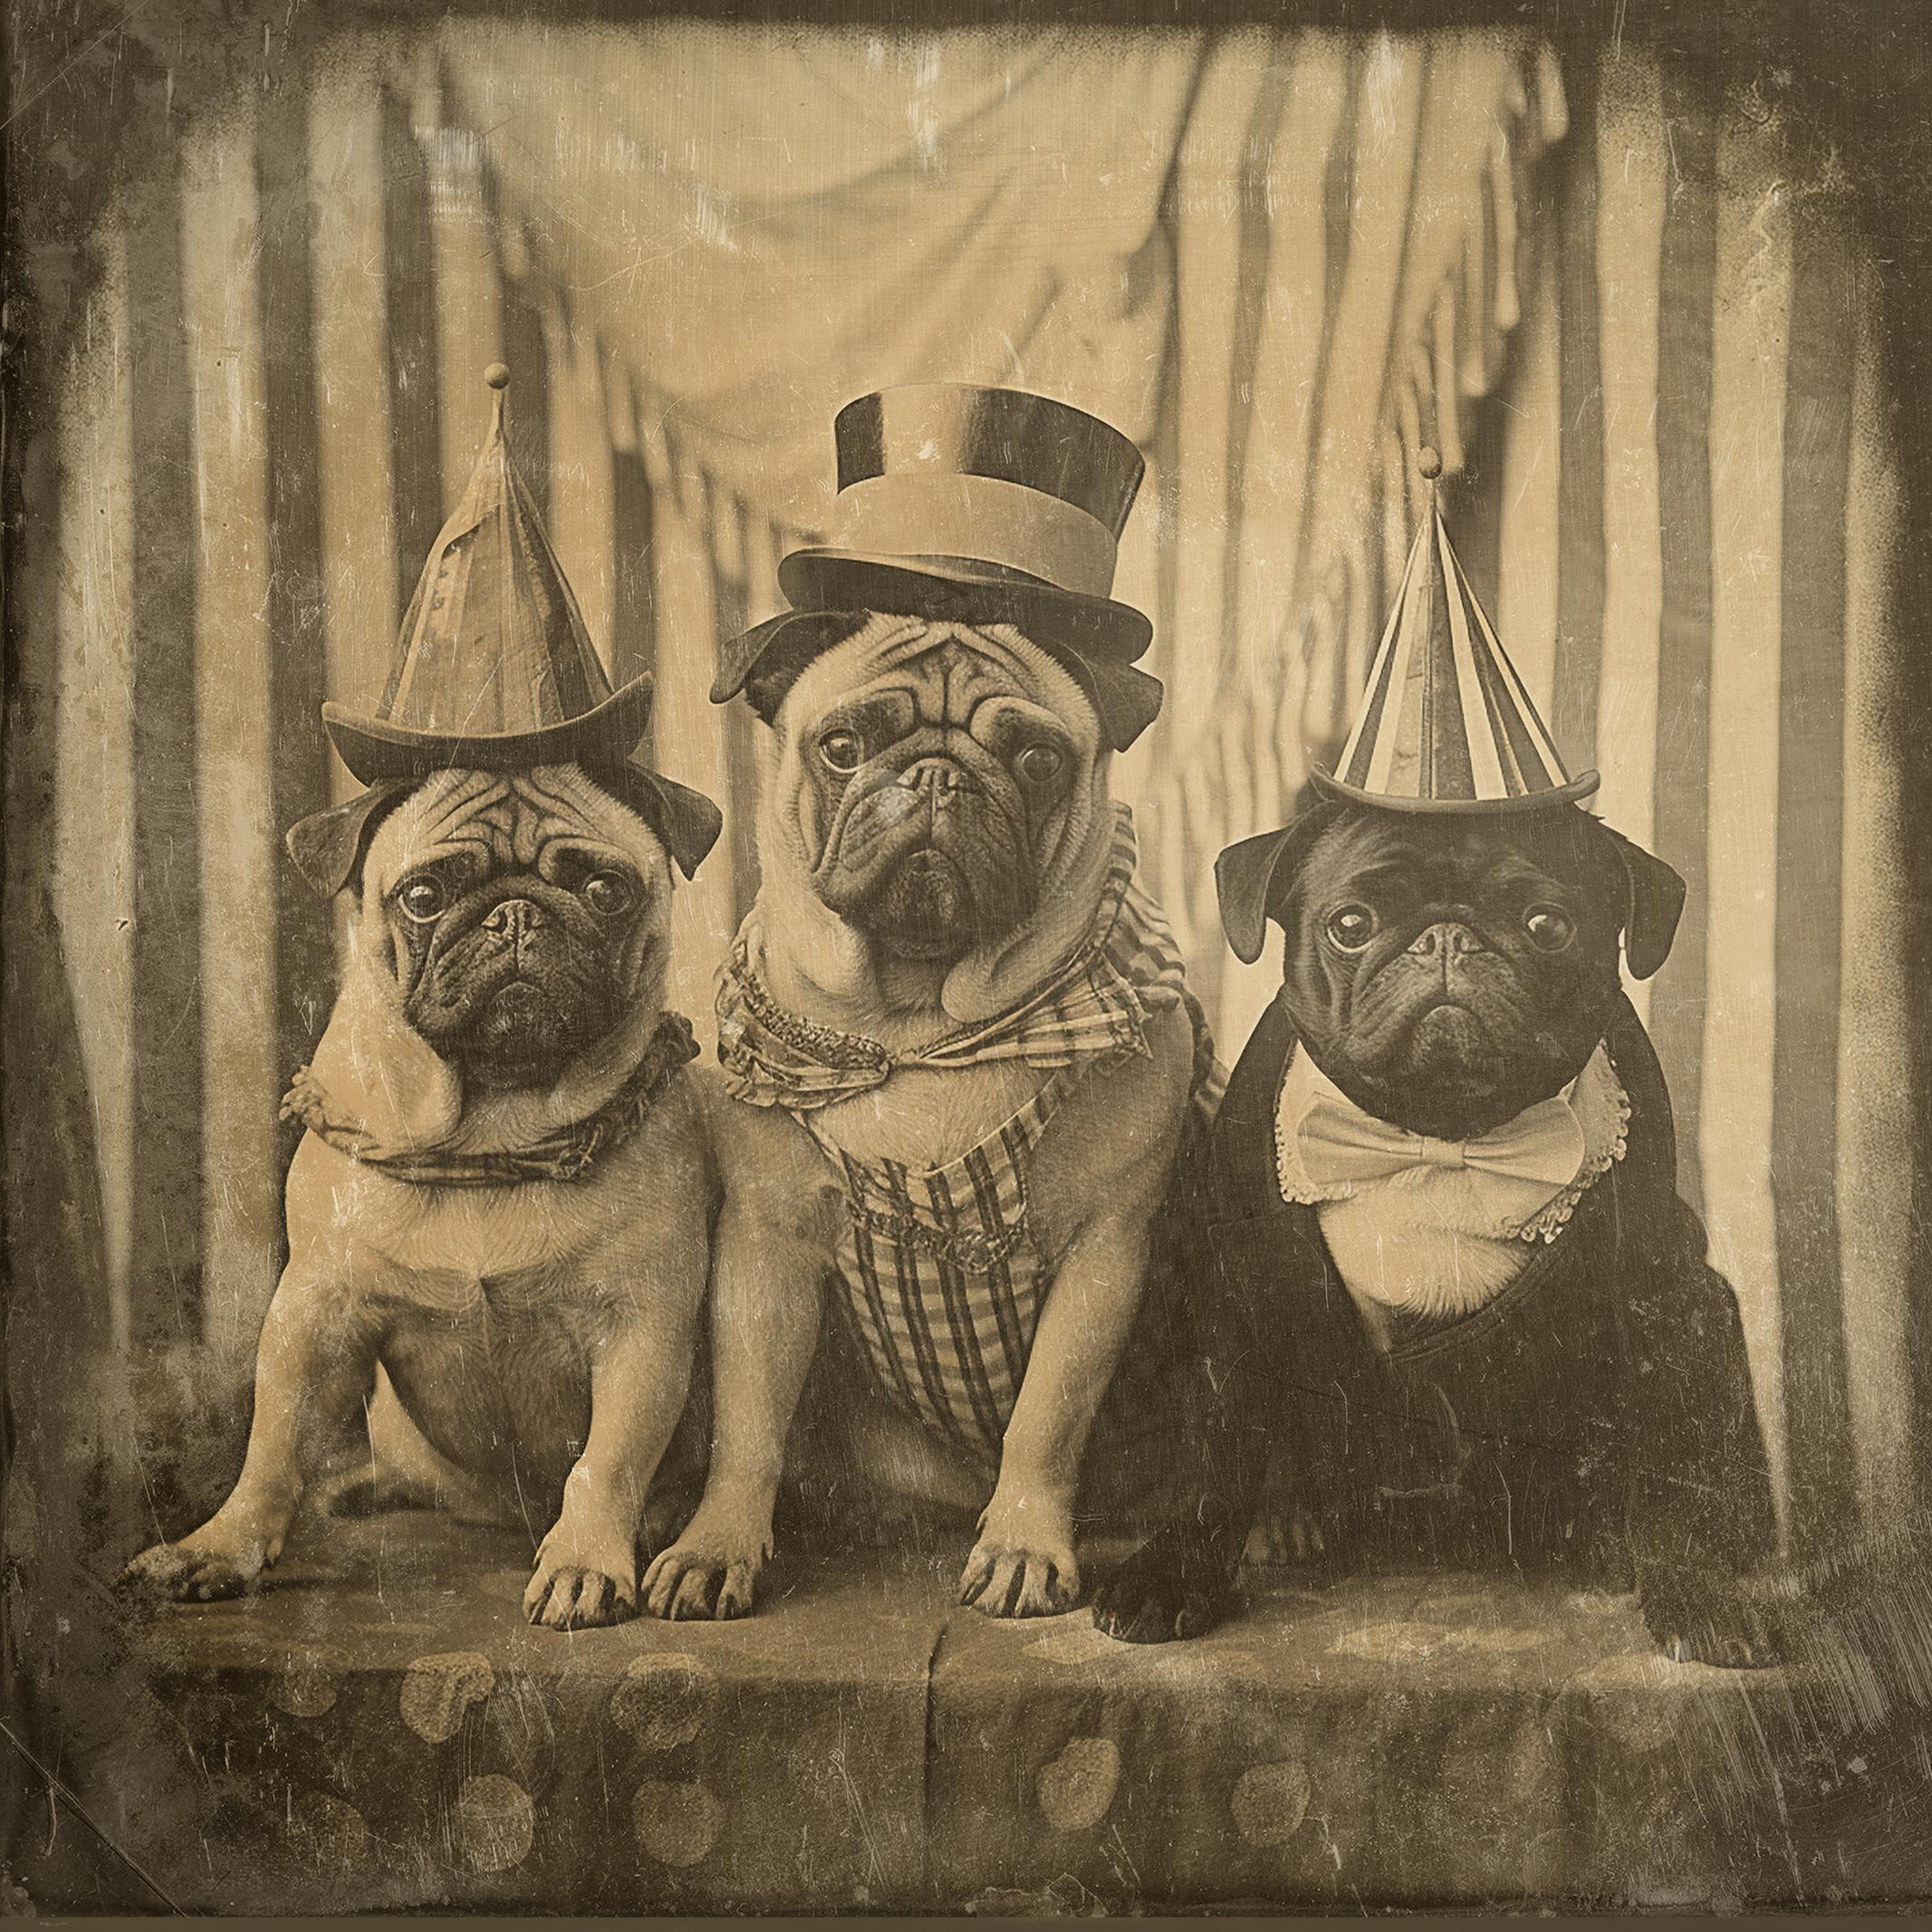 12"x12" photograph of three circus pugs - enchanting exotic daguerreotype repro